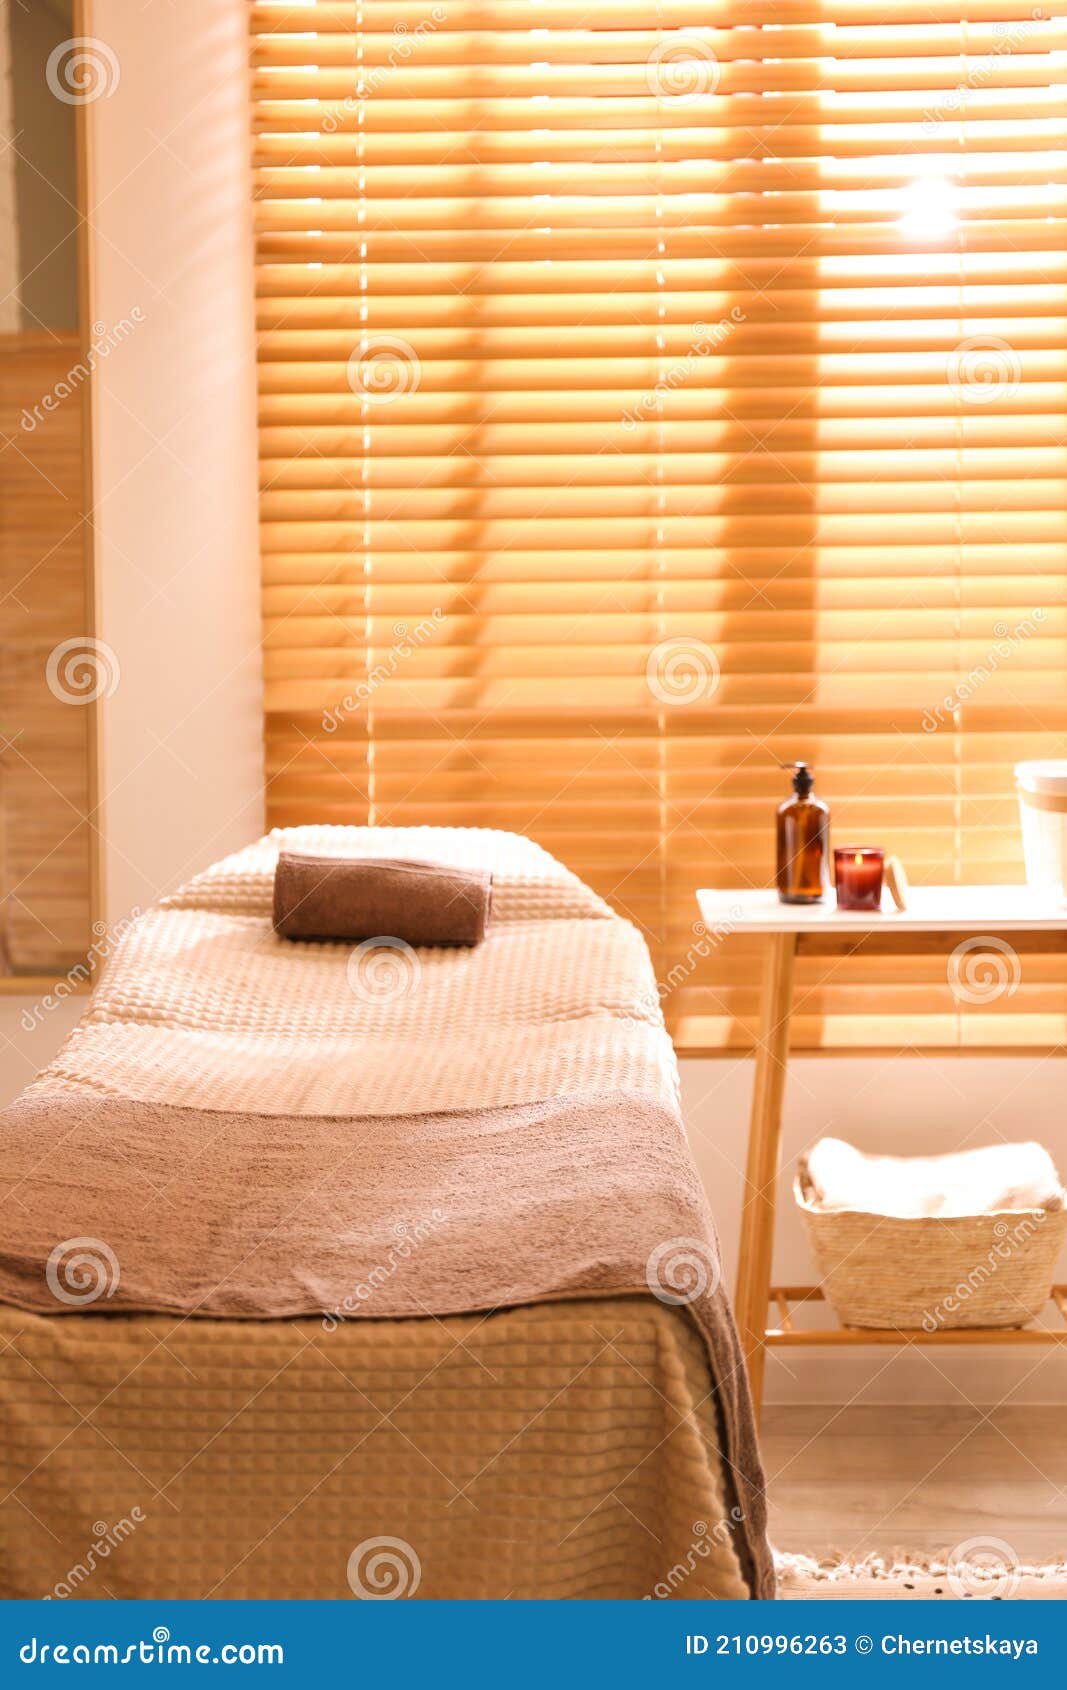 Stylish Massage Room Interior In Spa Salon Stock Image Image Of Blinds Design 210996263